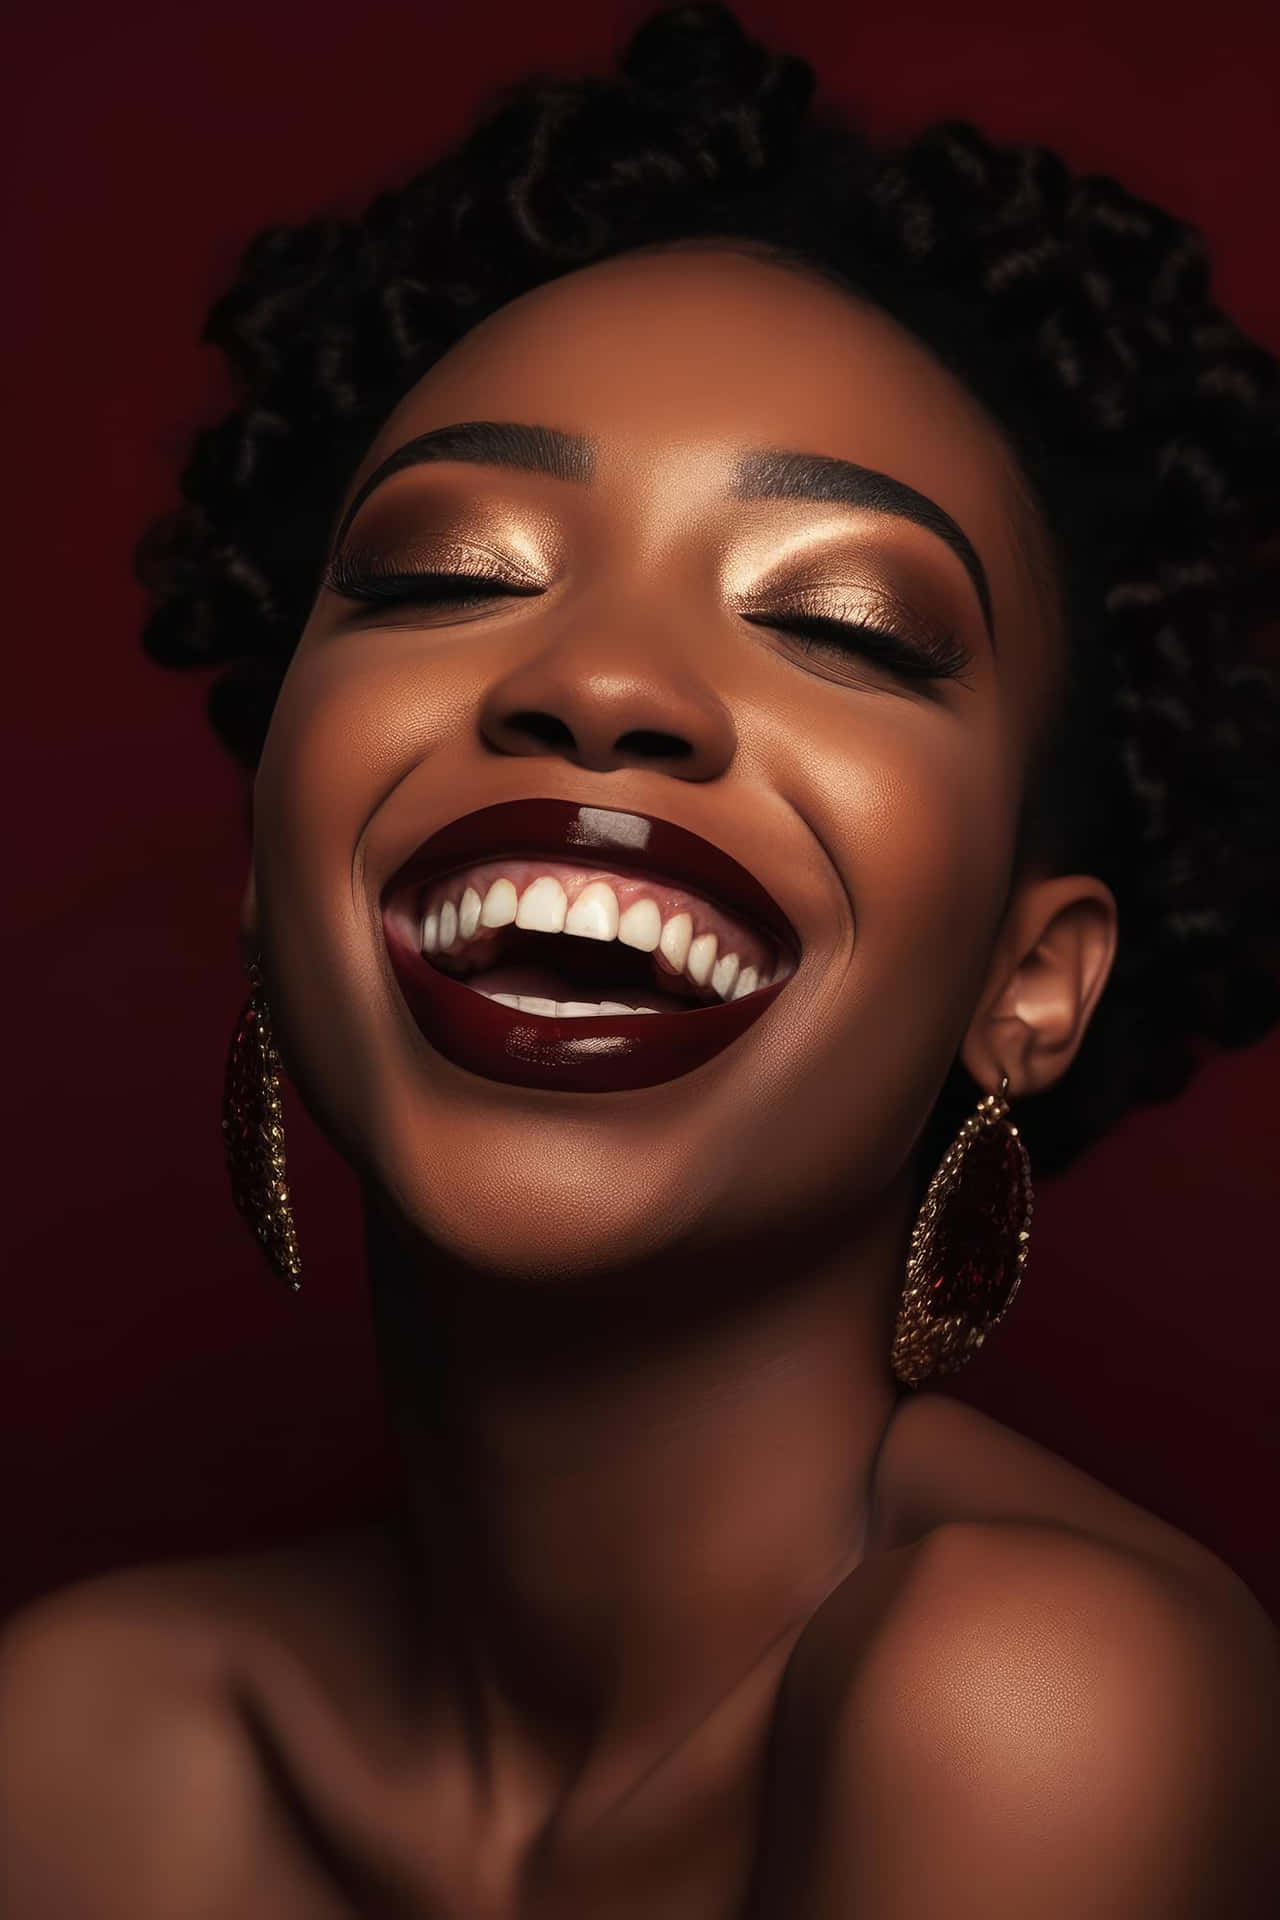 Radiant Smile Ebony Beauty.jpg Wallpaper